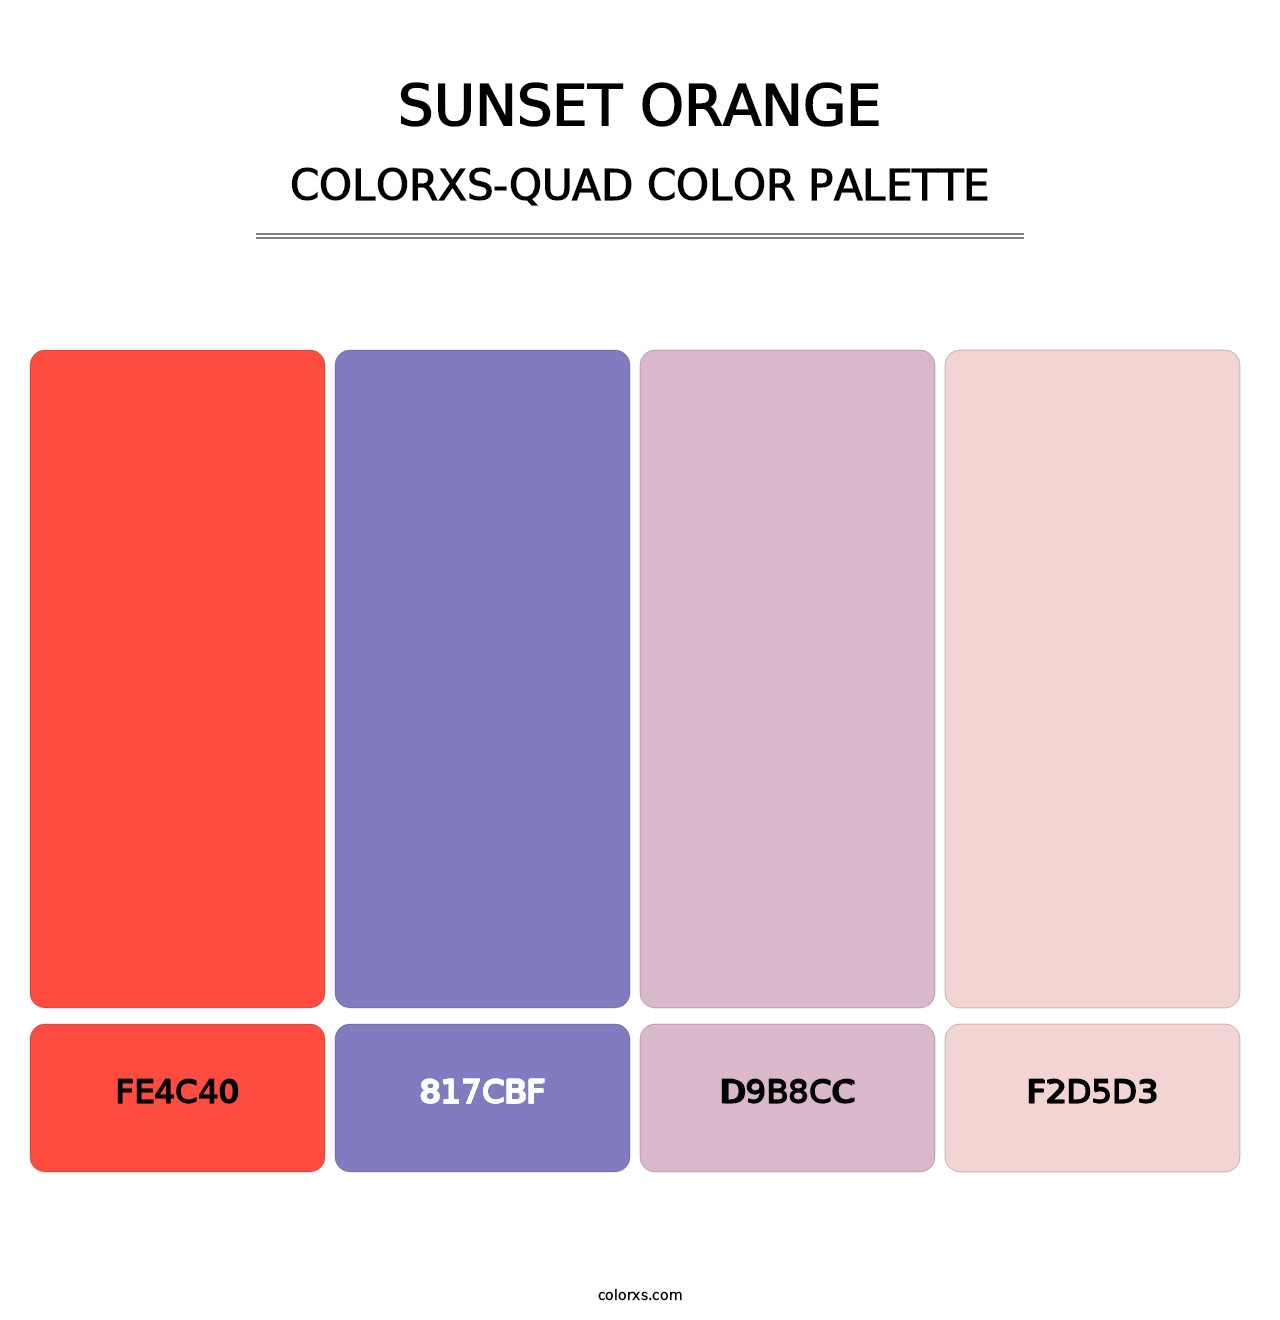 Sunset Orange - Colorxs Quad Palette